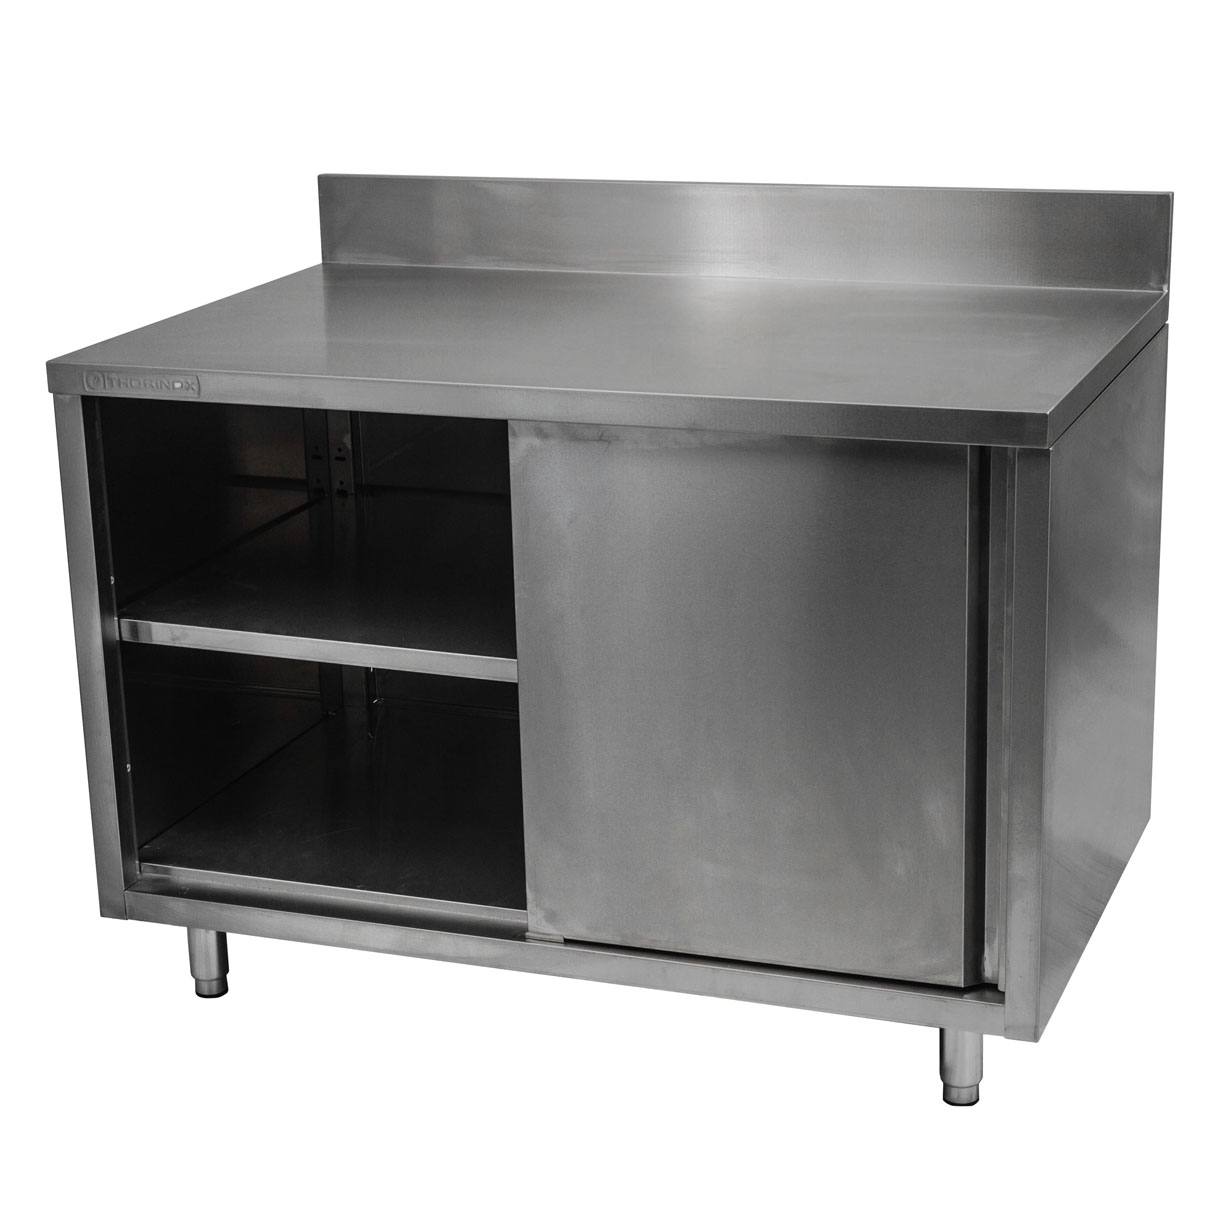 Thorinox TKCA-3072-BK 30"x72" Stainless Steel Cabinet with Backsplash